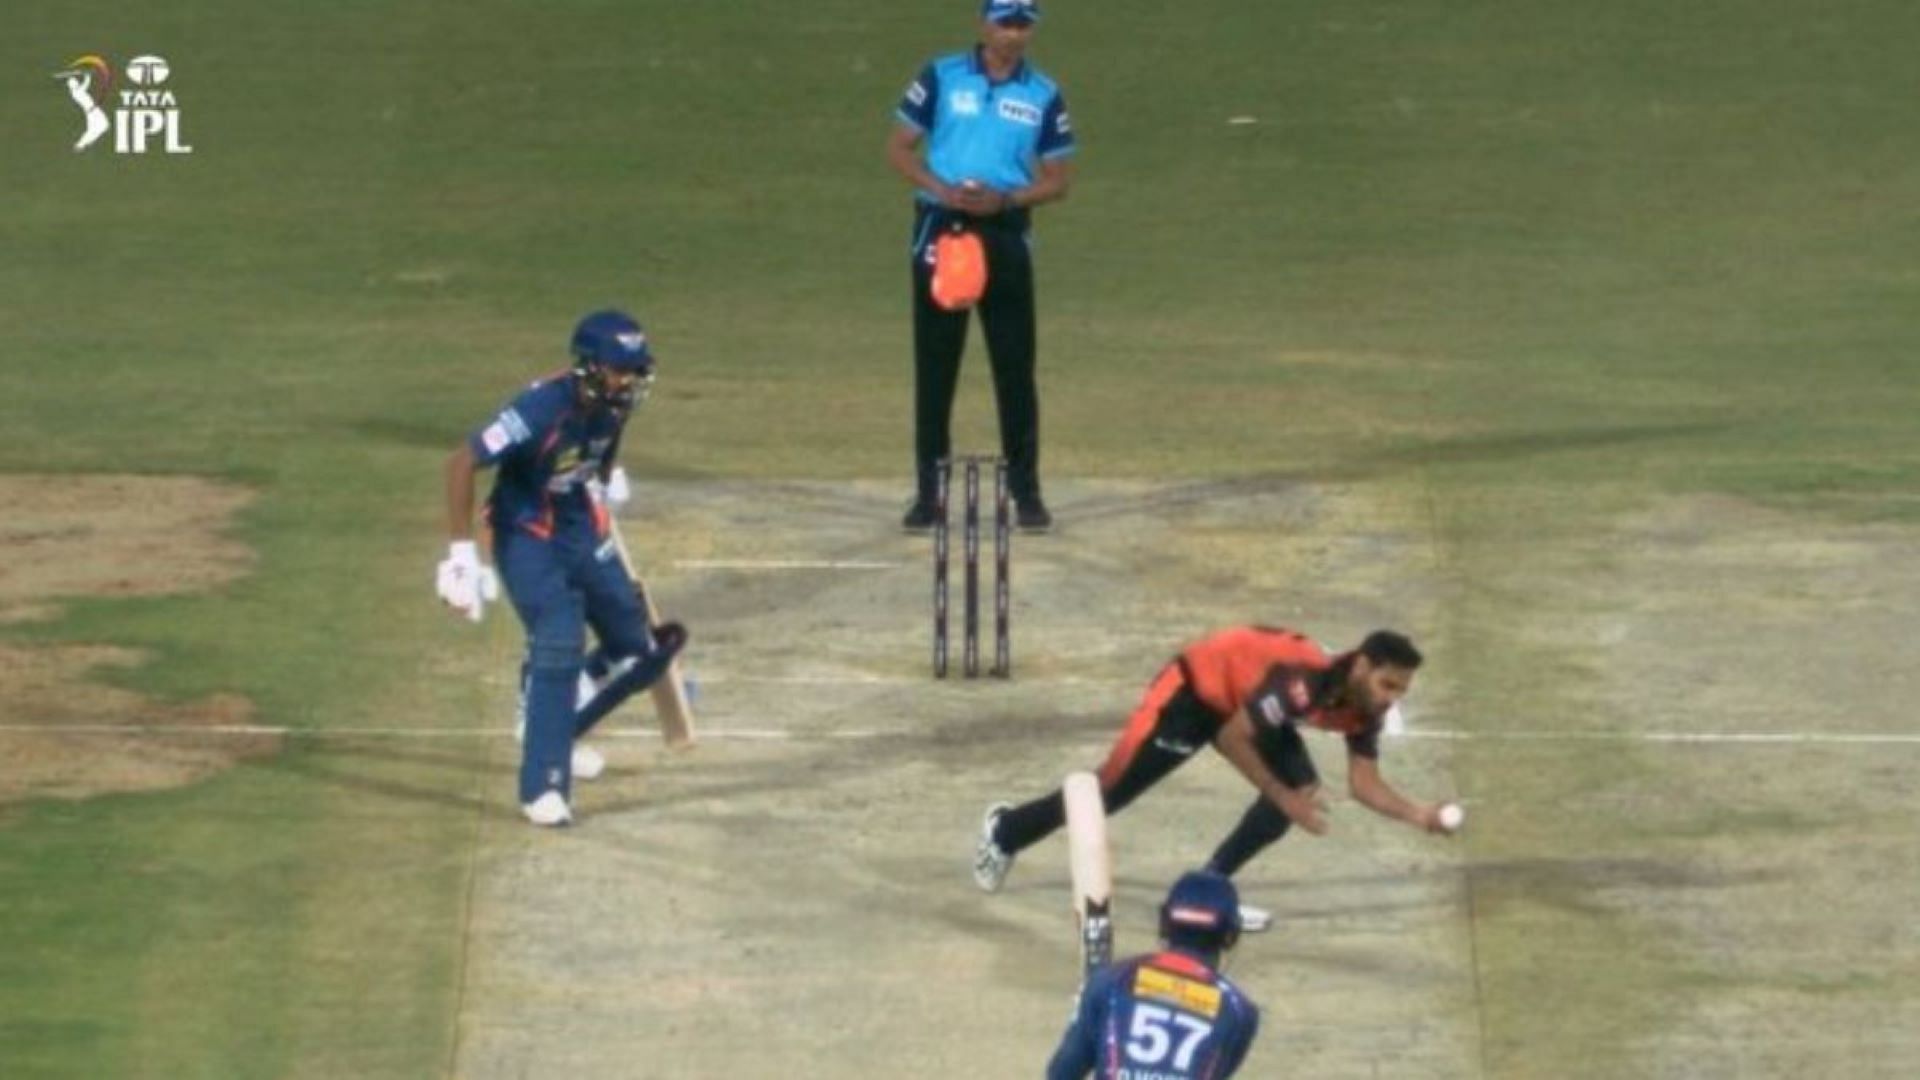 Bhuvaneshwar Kumar pulls off a terrific return catch off his bowling to dismiss Deepak Hooda